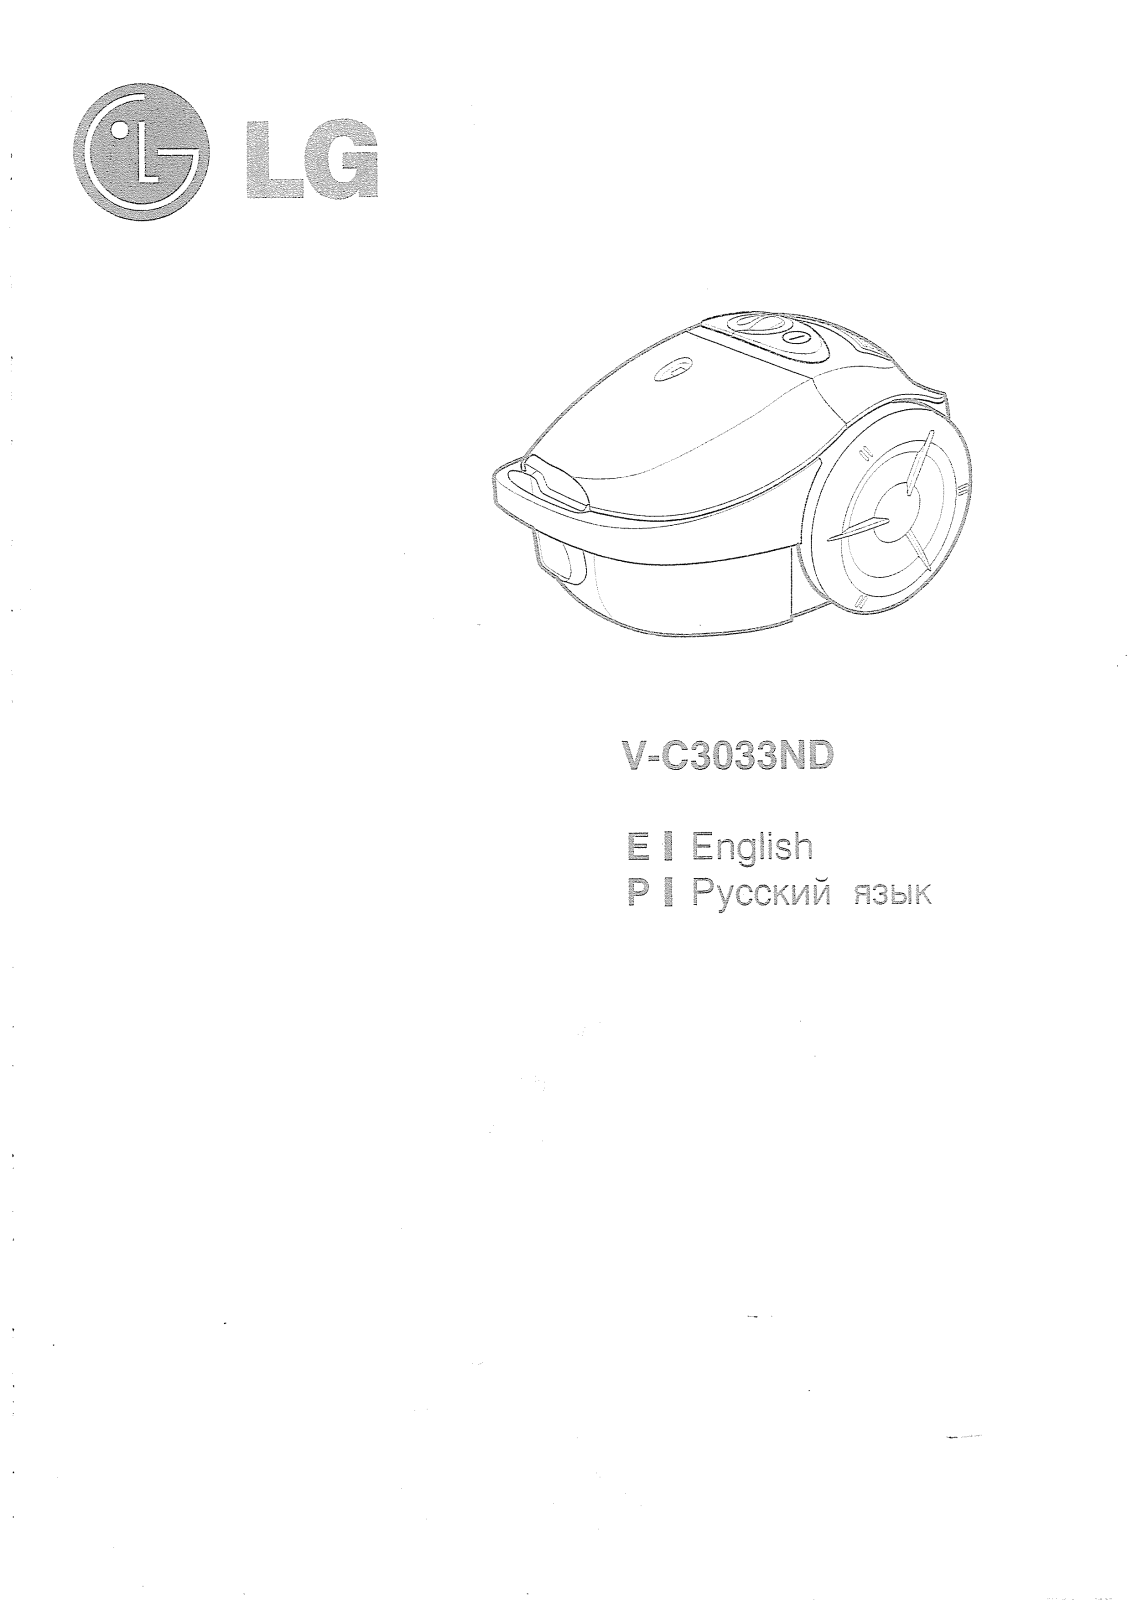 LG V-C3033 ND User Manual